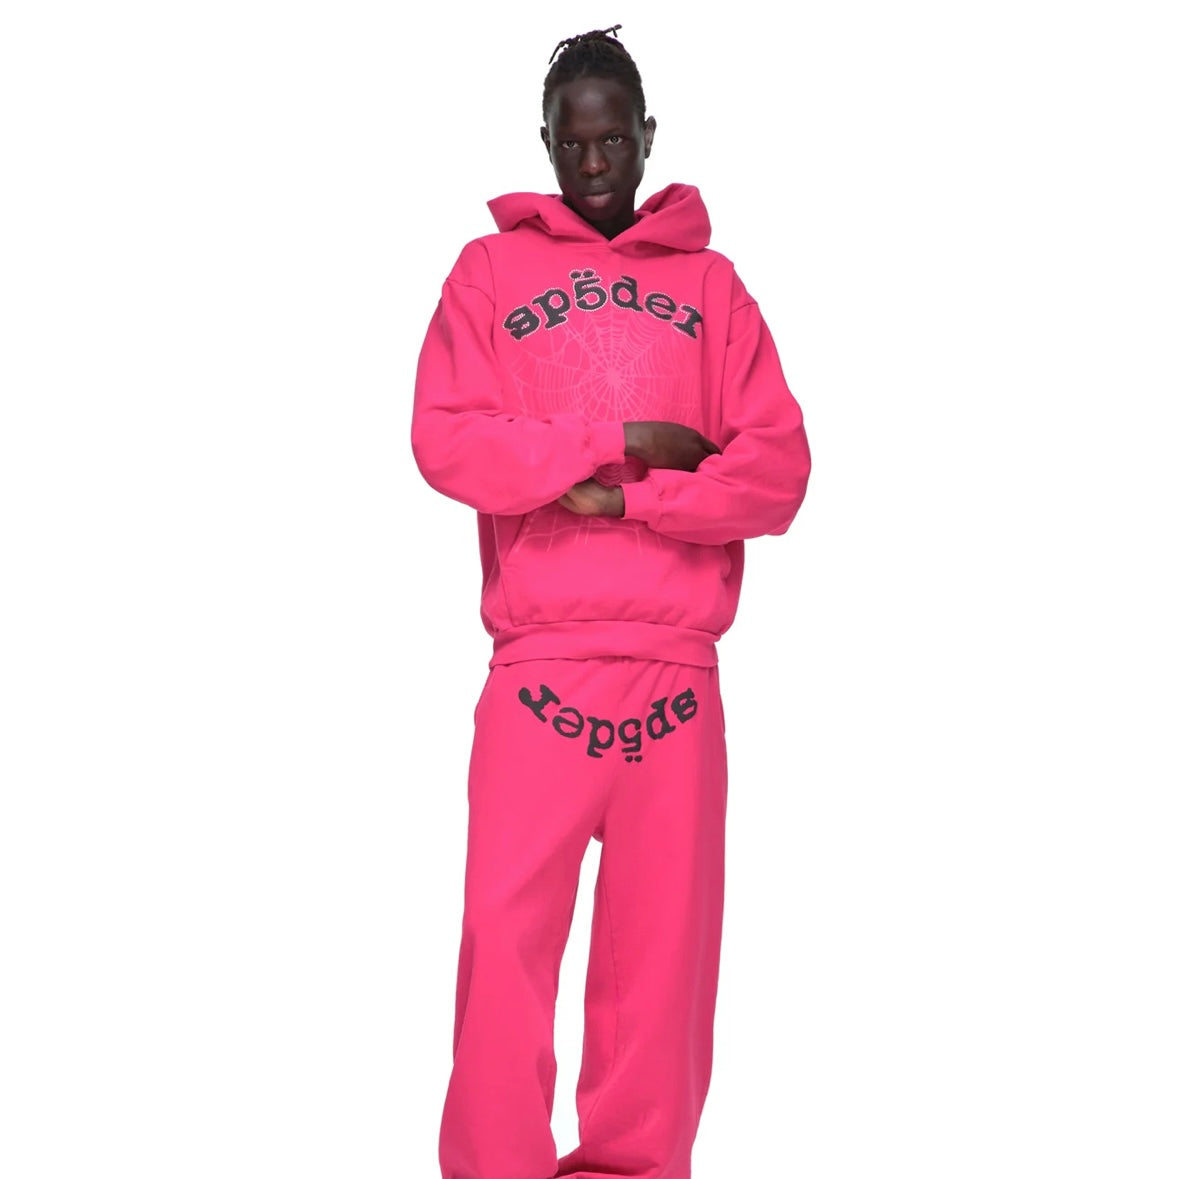 Sp5der Pink Black Rhinestone Legacy Hoodie On Body Full Outfit Male